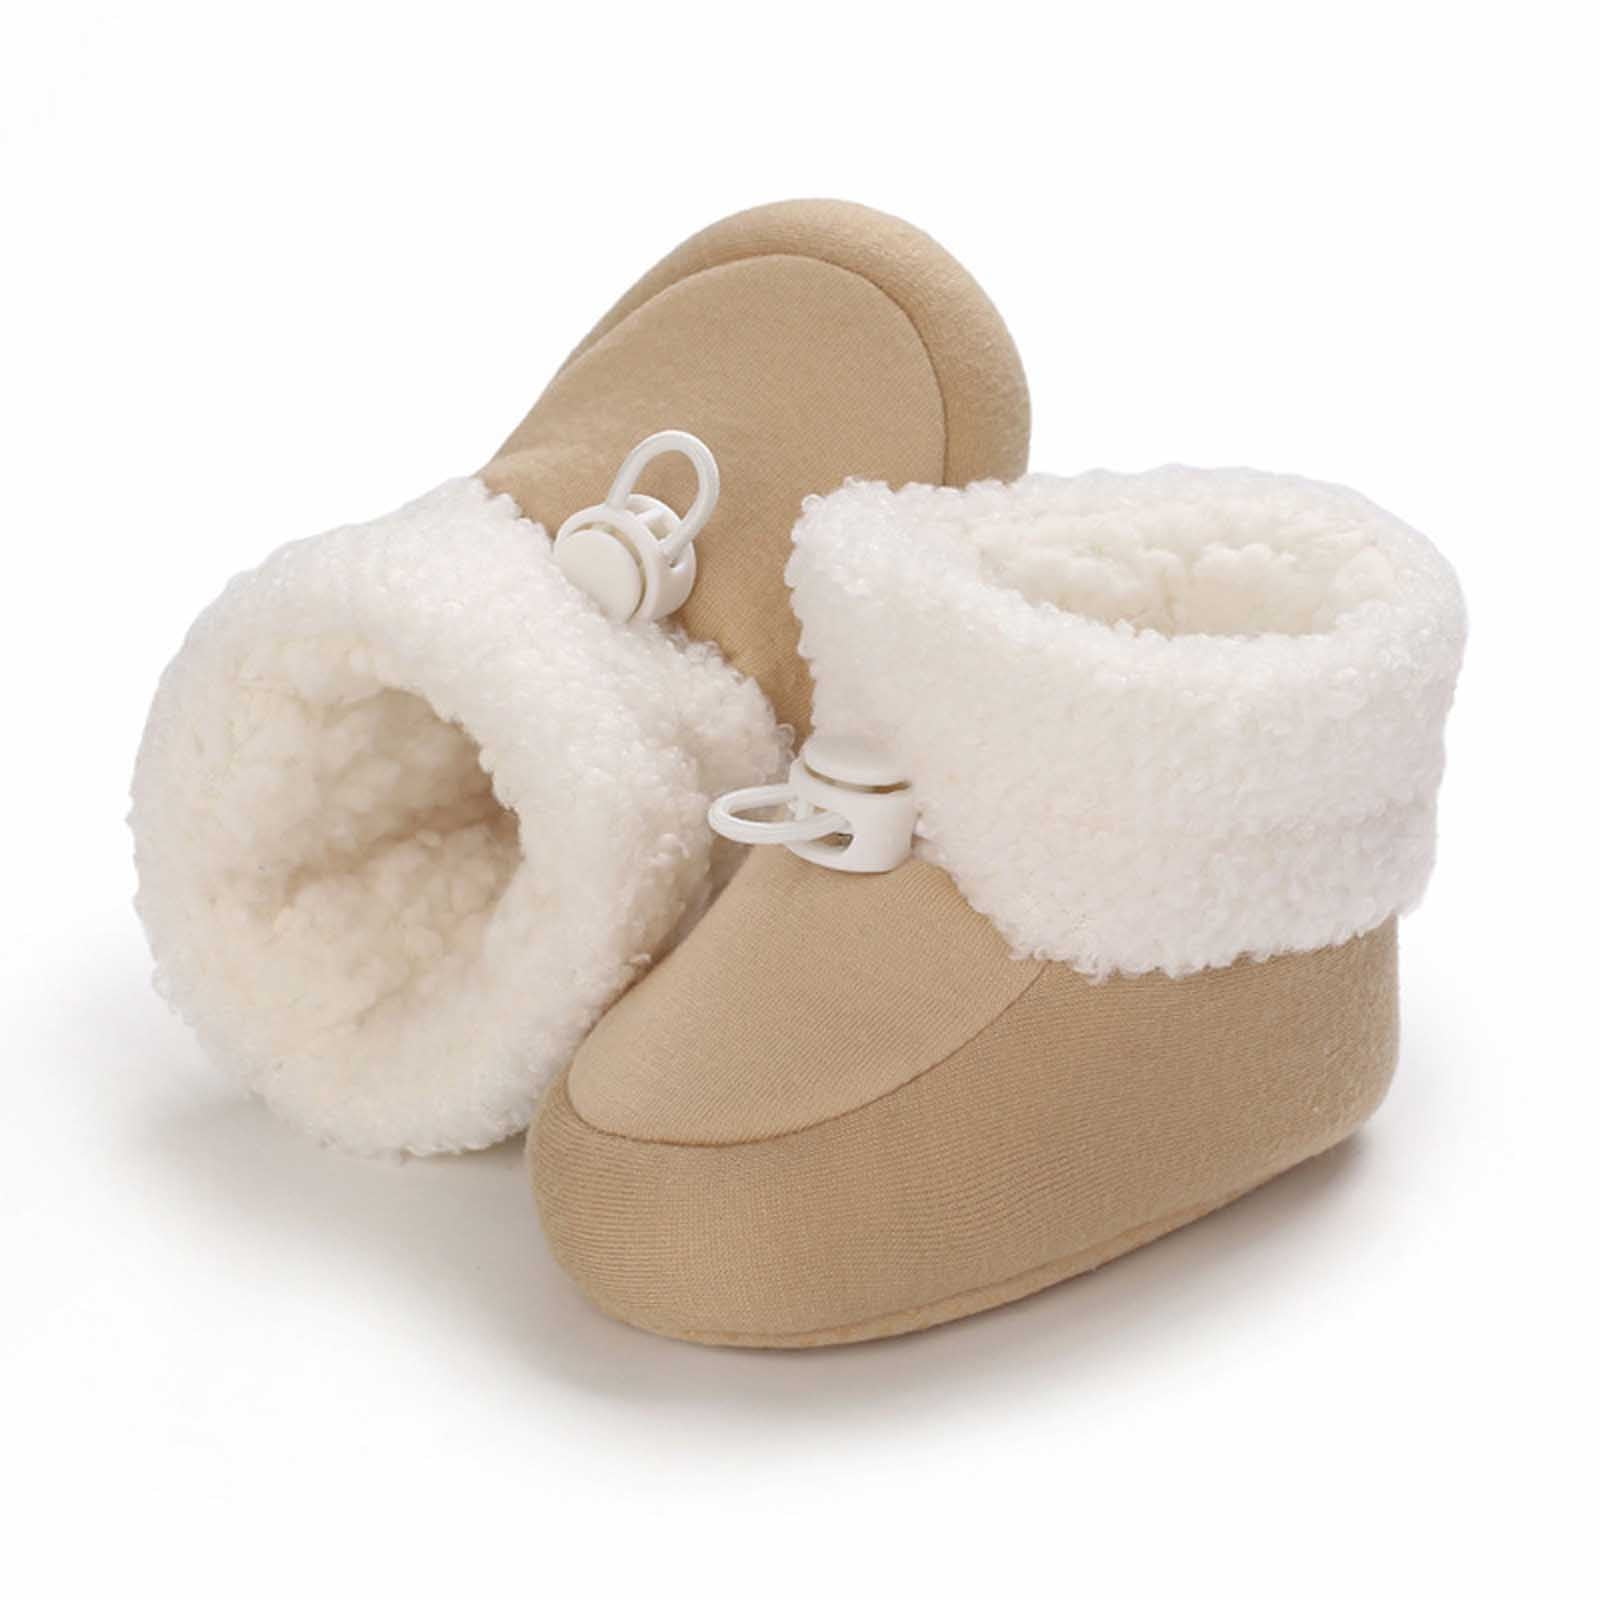 Lanhui Newborn Baby Girls & Boys Soft Sole Snow Boots Soft Crib Shoes Toddler Boots